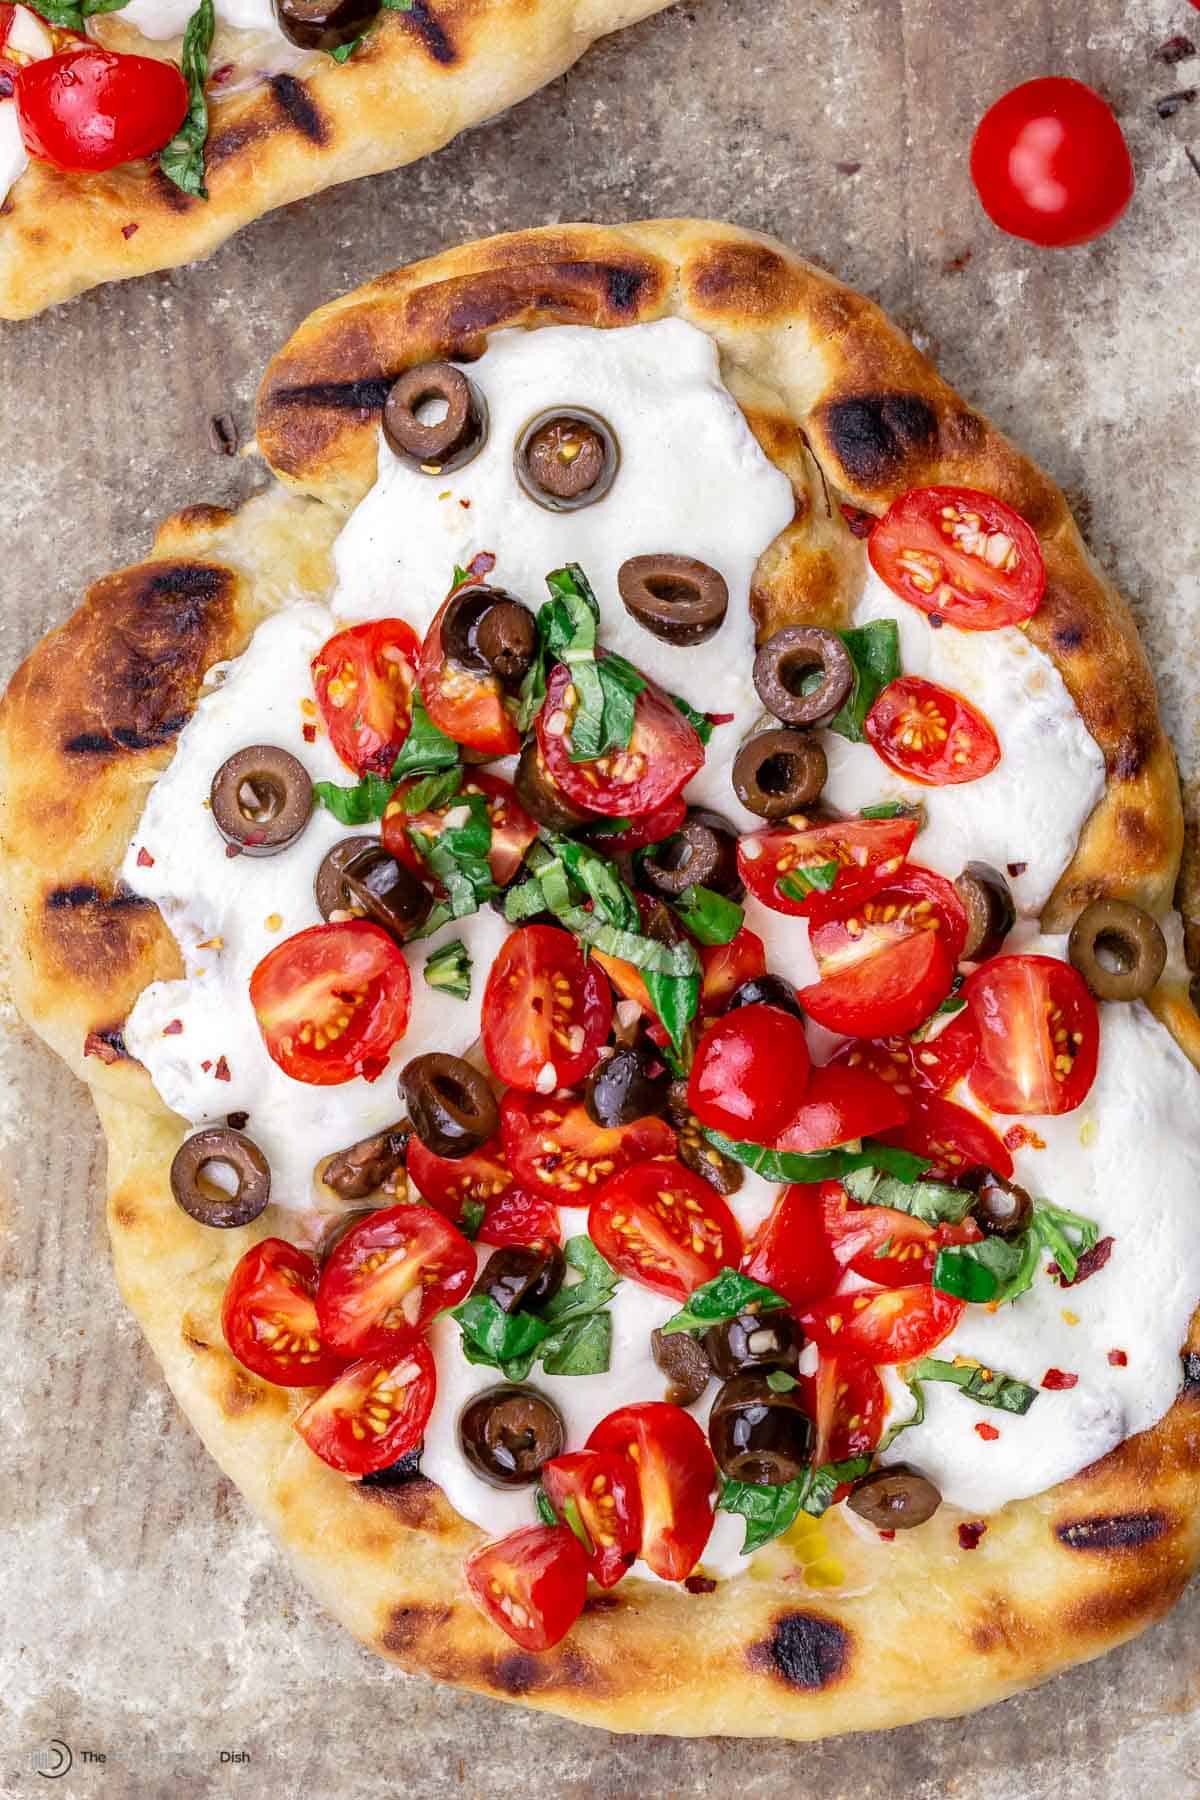 https://www.themediterraneandish.com/wp-content/uploads/2021/06/grilled-pizza-recipe-8.jpg